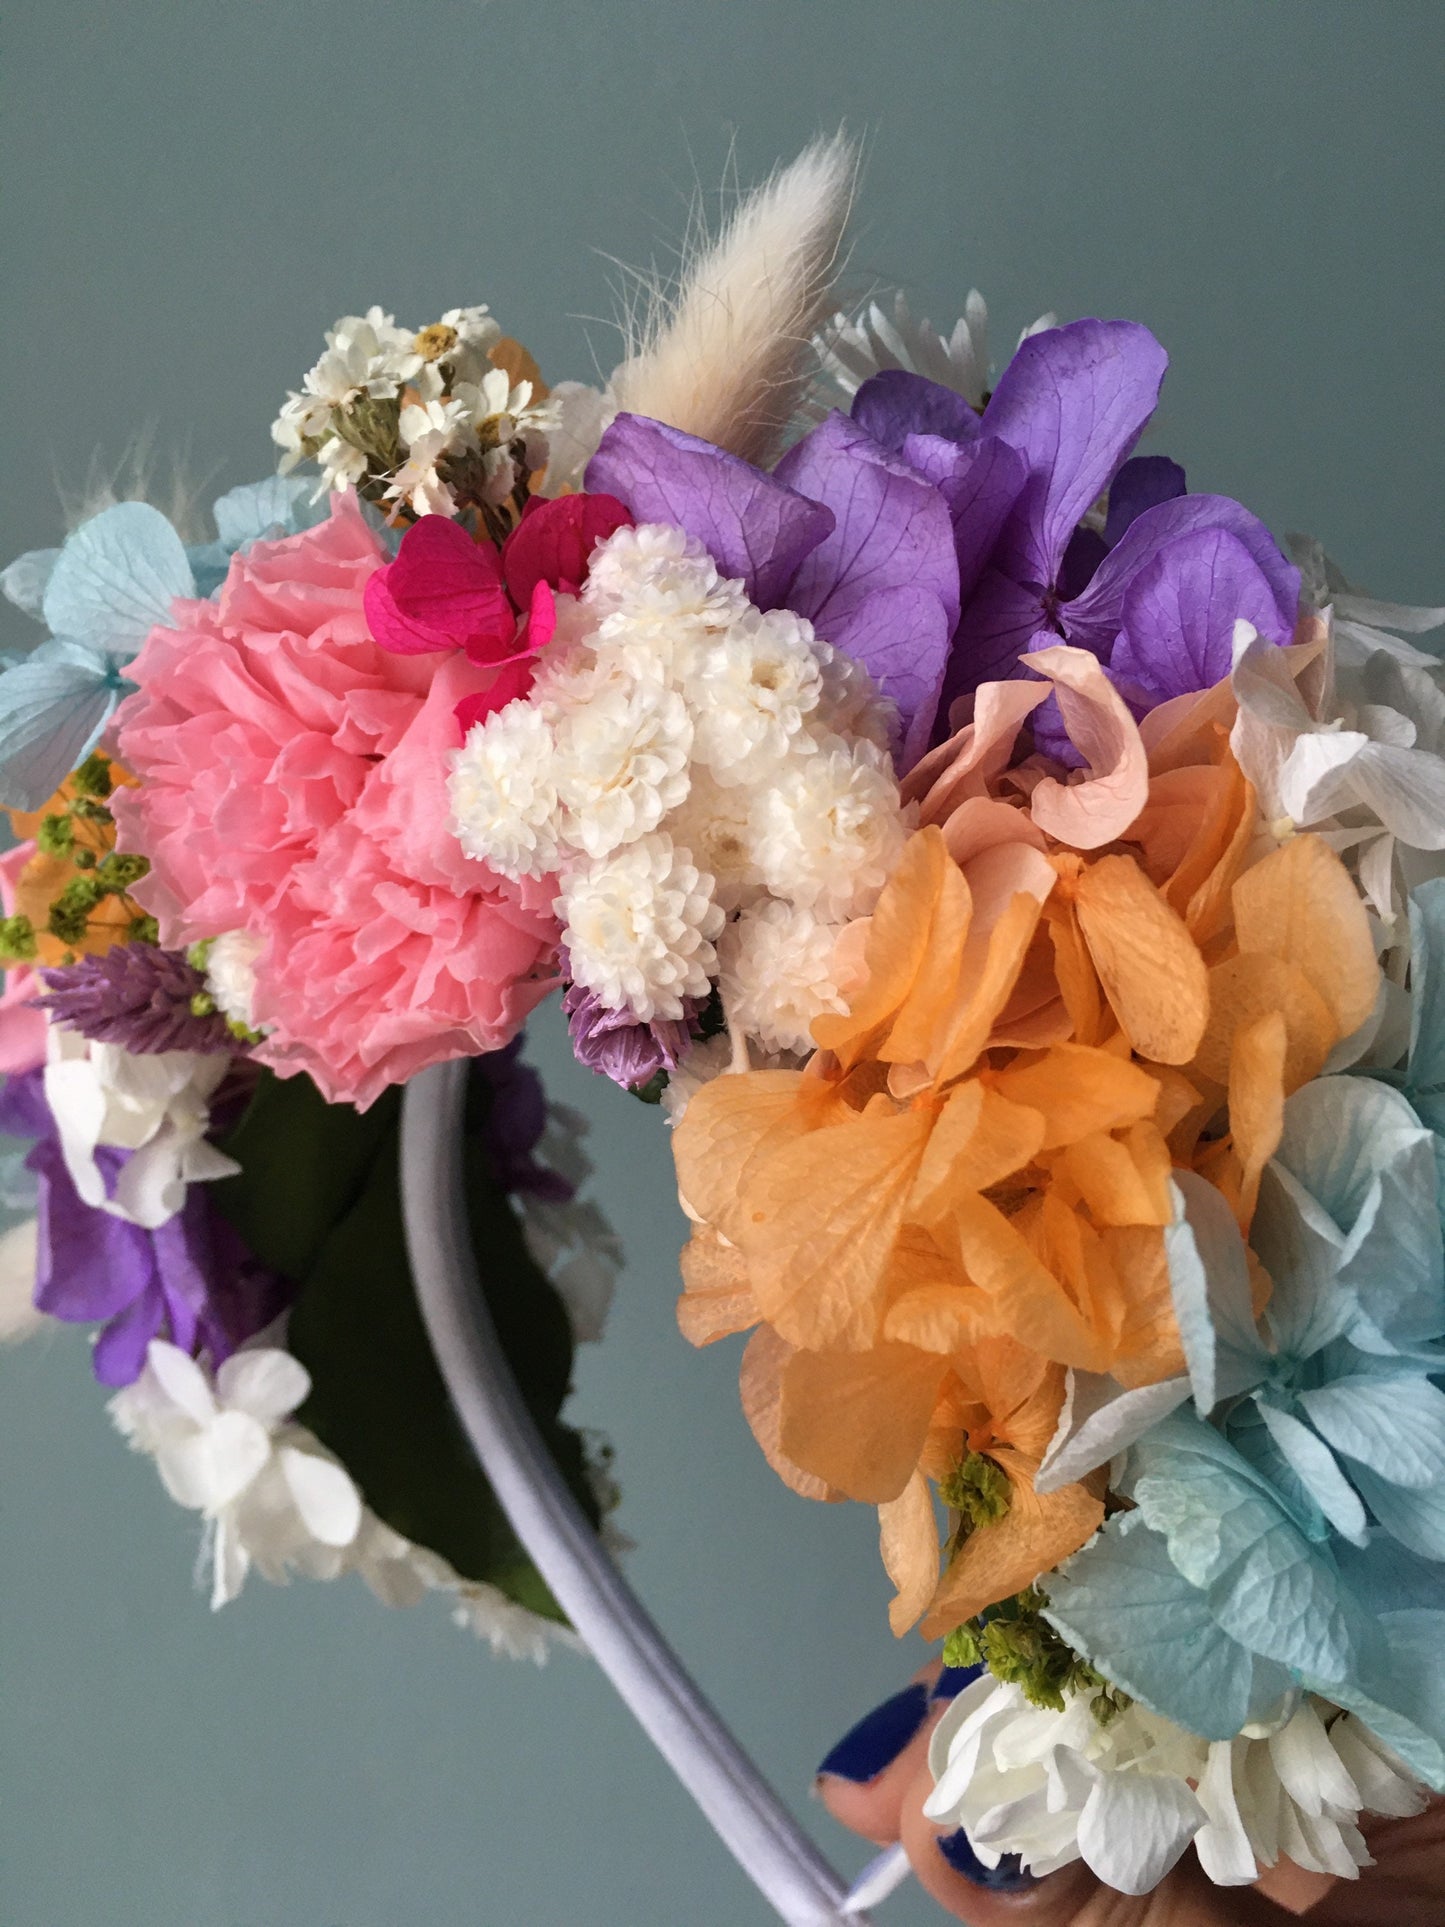 Large Dried Flower Wedding Crown UK, Frida Floral Headband, Boho Bridal Big Festival Headband, Colourful Magnificent Pink Tiara Millinery UK